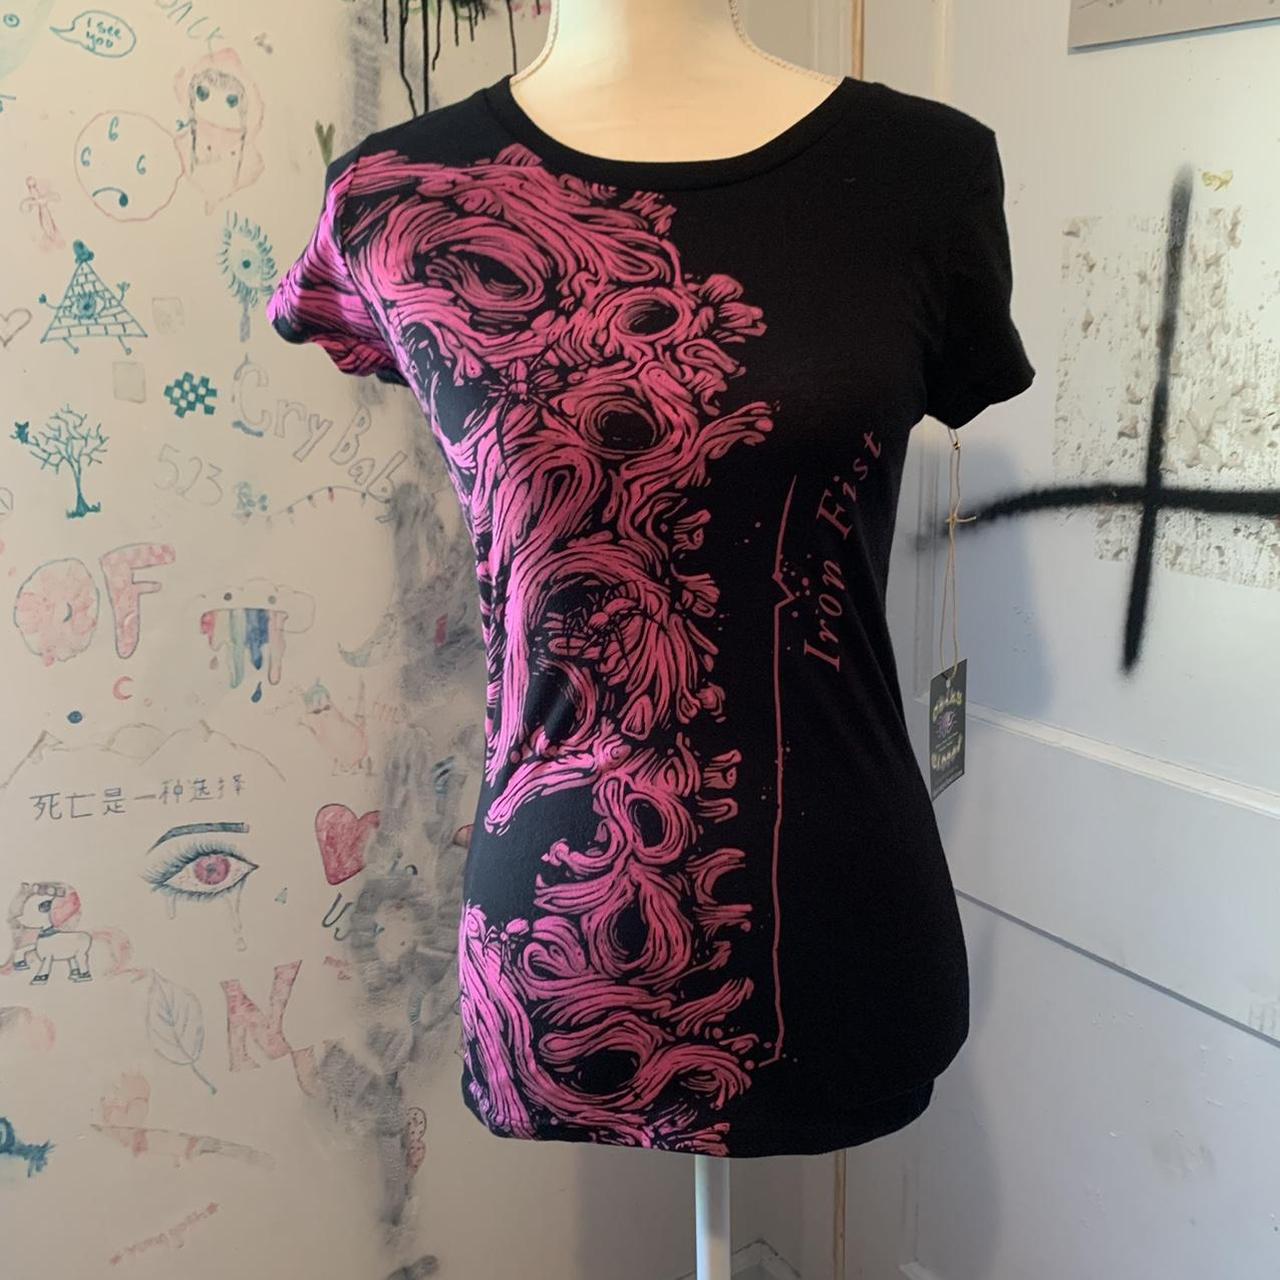 Iron Fist Women's Black and Pink T-shirt